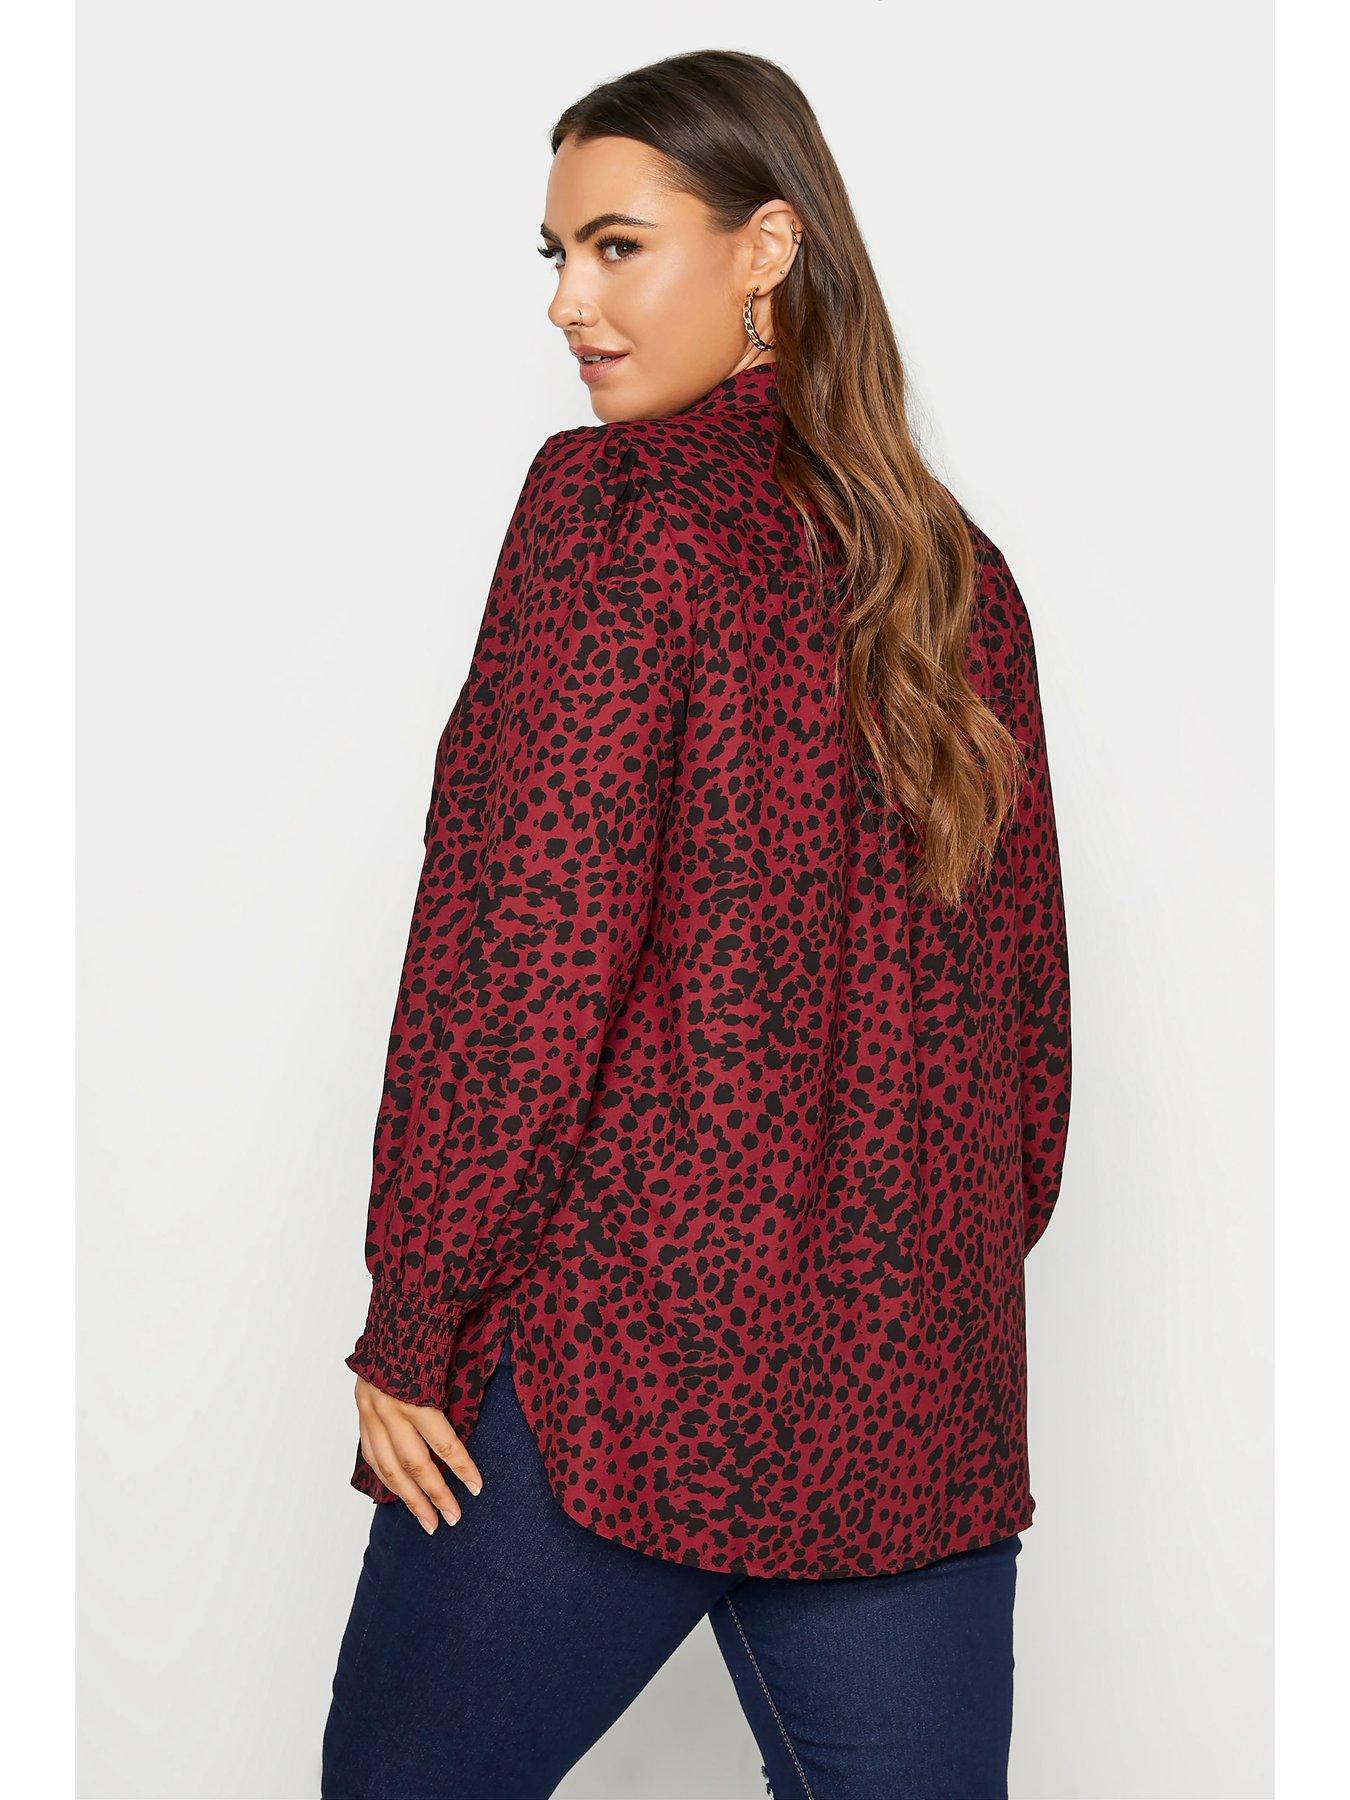 Blouses & shirts Yours Shirred Cuff Long Sleeve Jewel Leopard Boyfriend Shirt - Pink